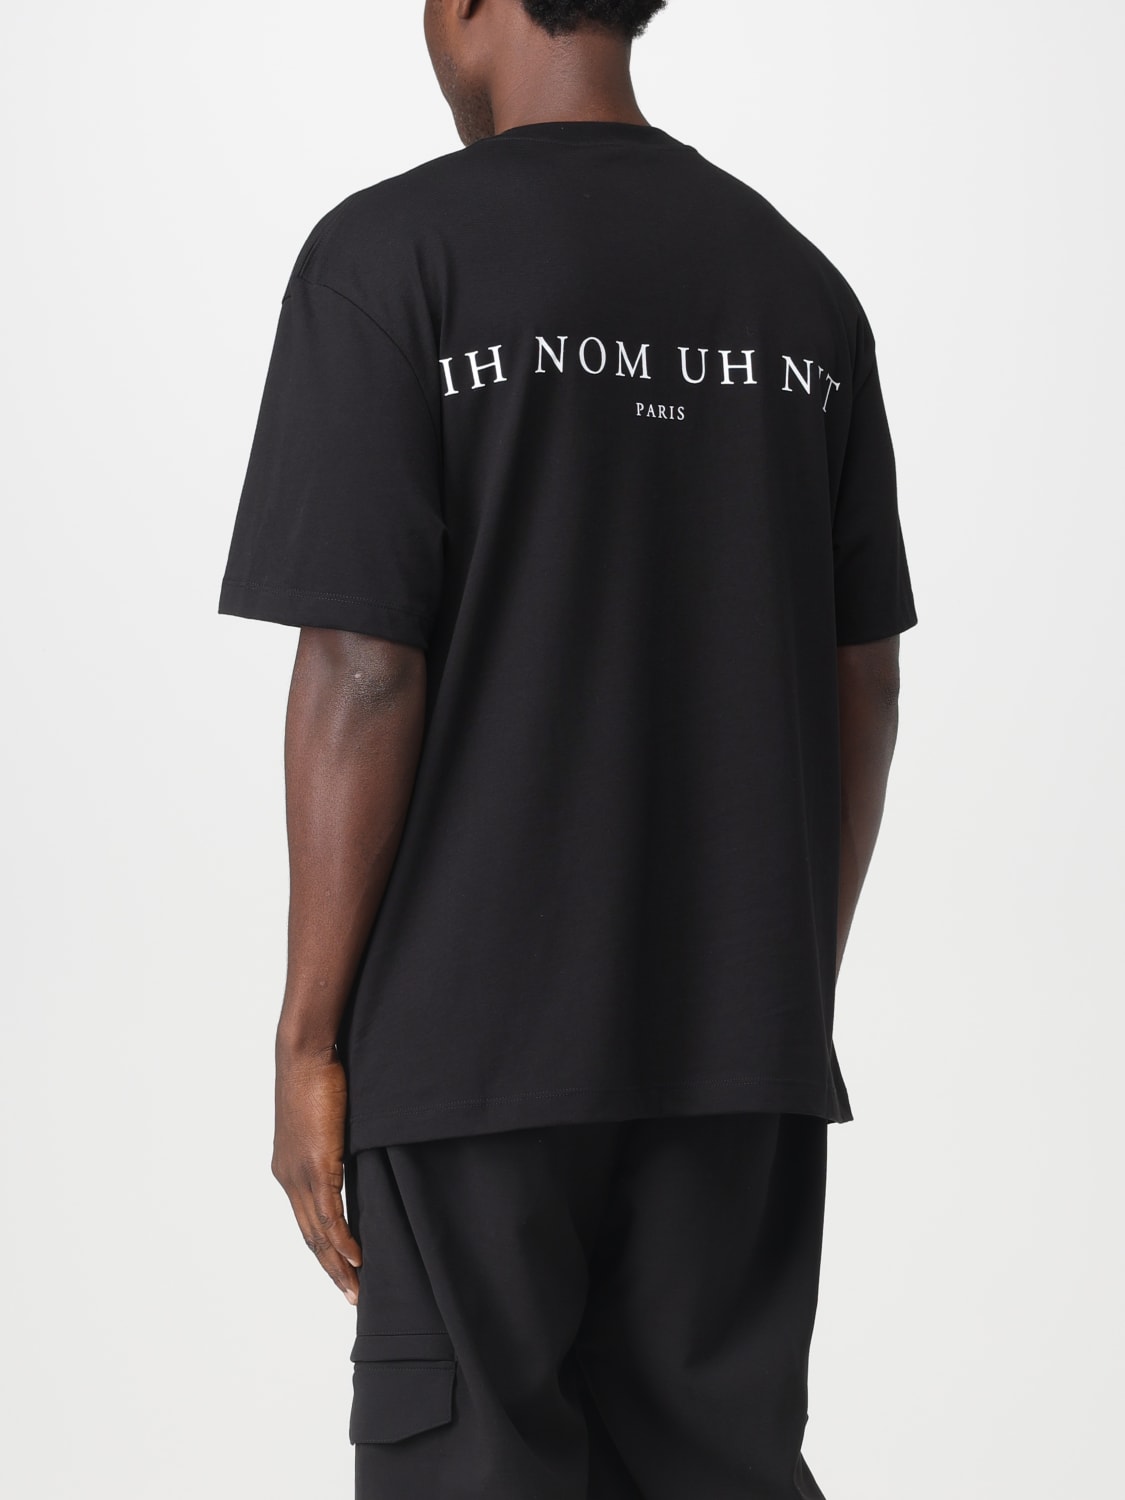 IH NOM UH NIT: t-shirt for man - Black | Ih Nom Uh Nit t-shirt